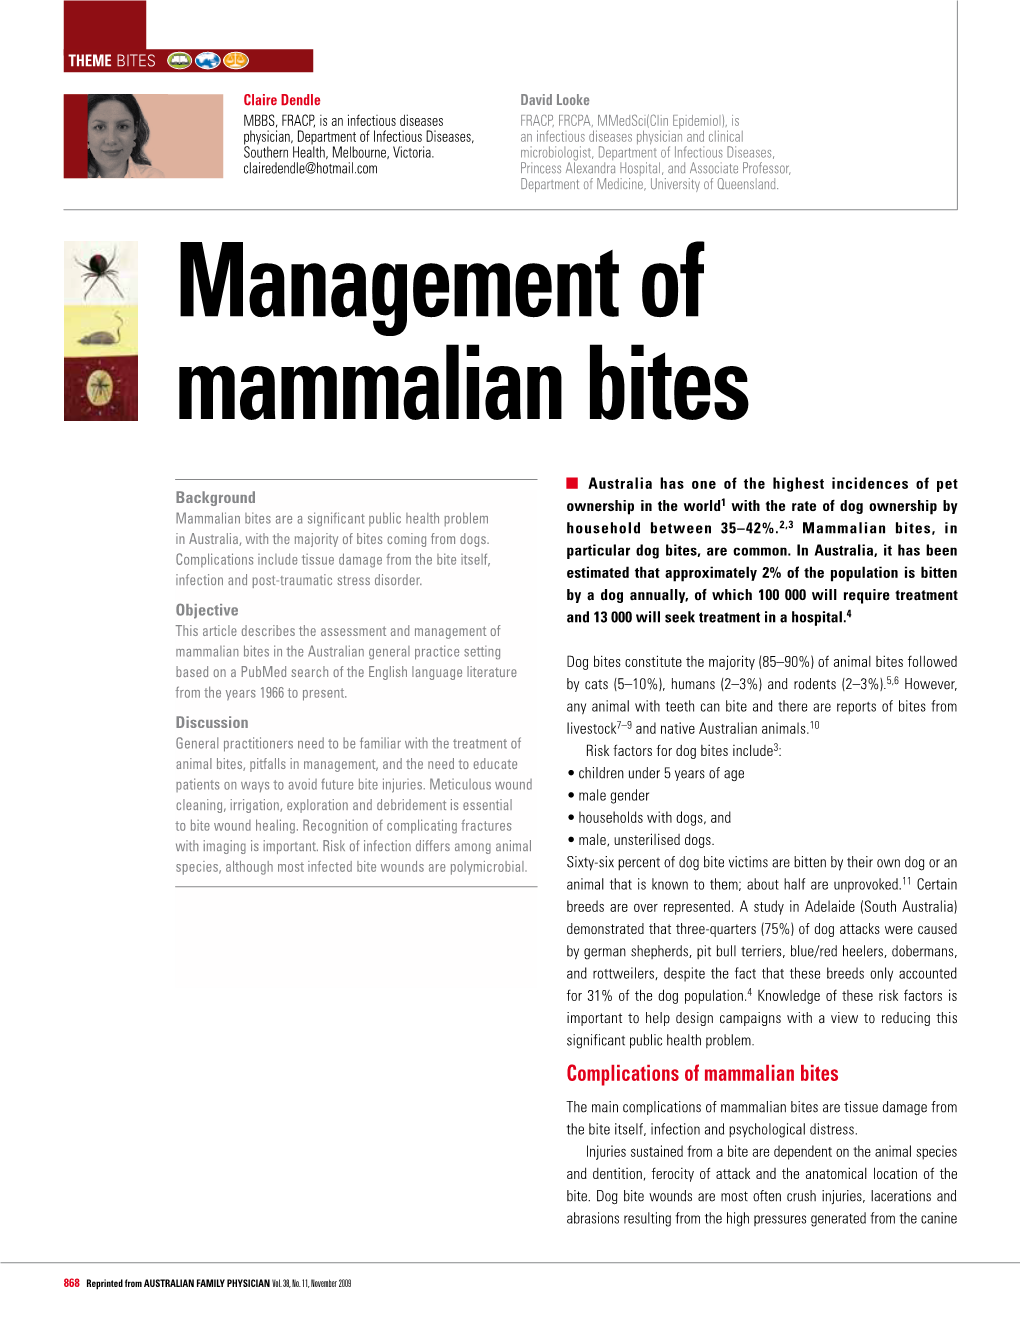 Management of Mammalian Bites